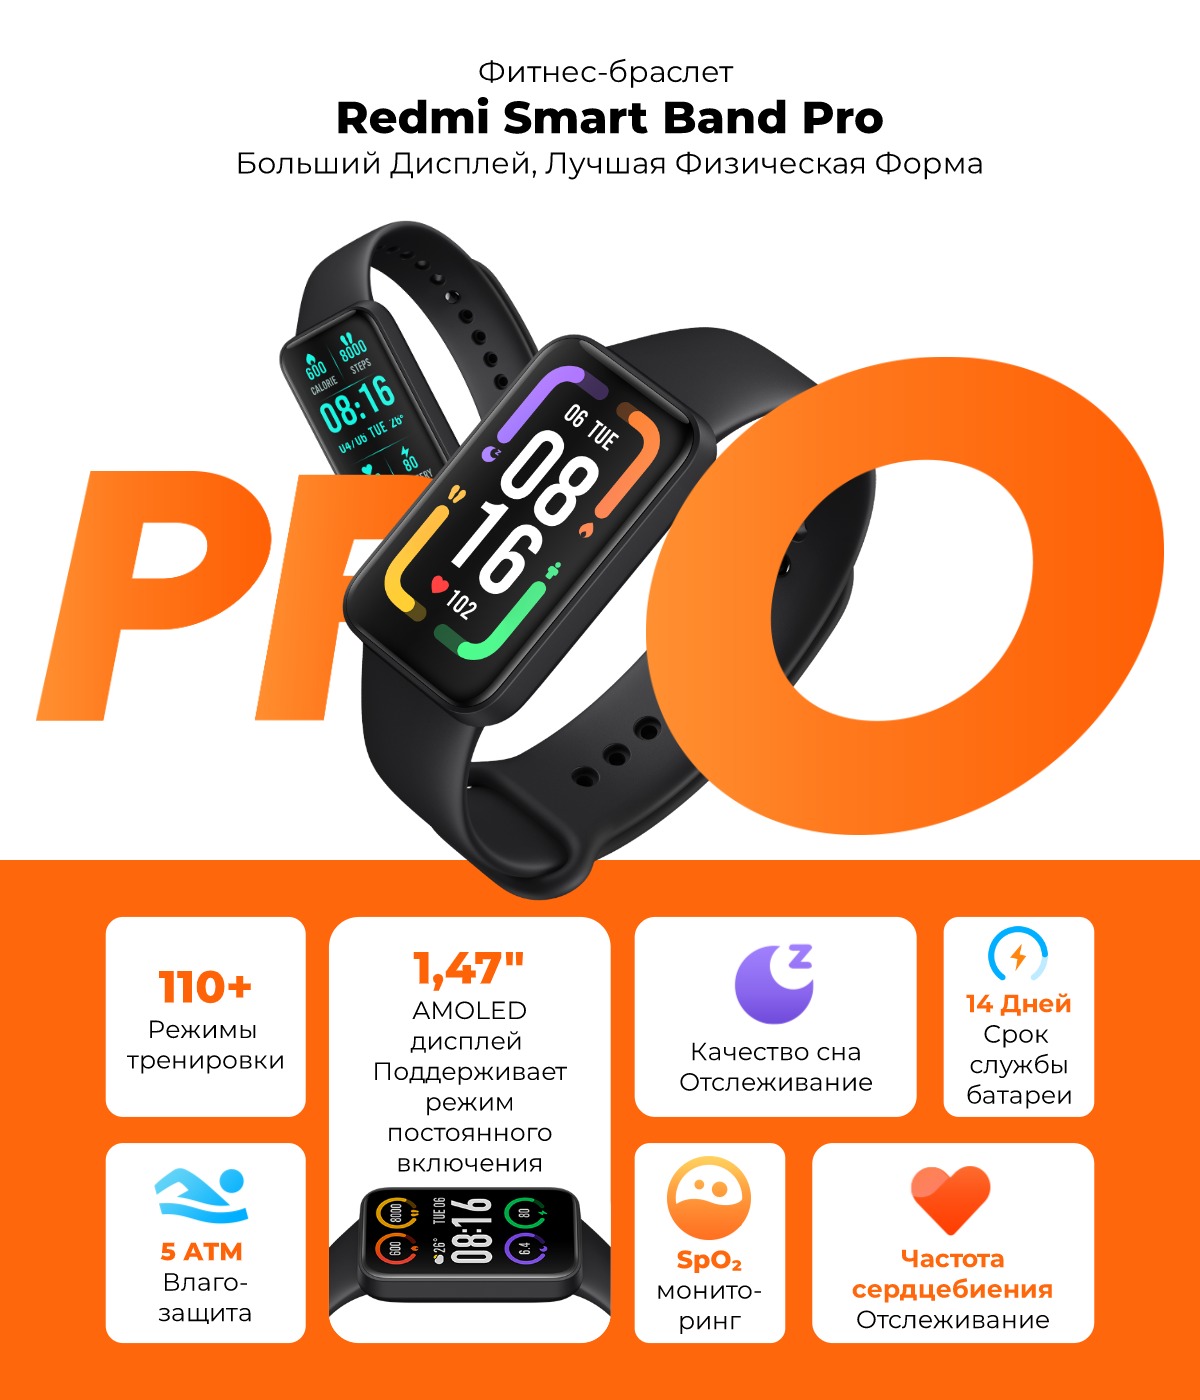 Redmi-Smart-Band-Pro-01